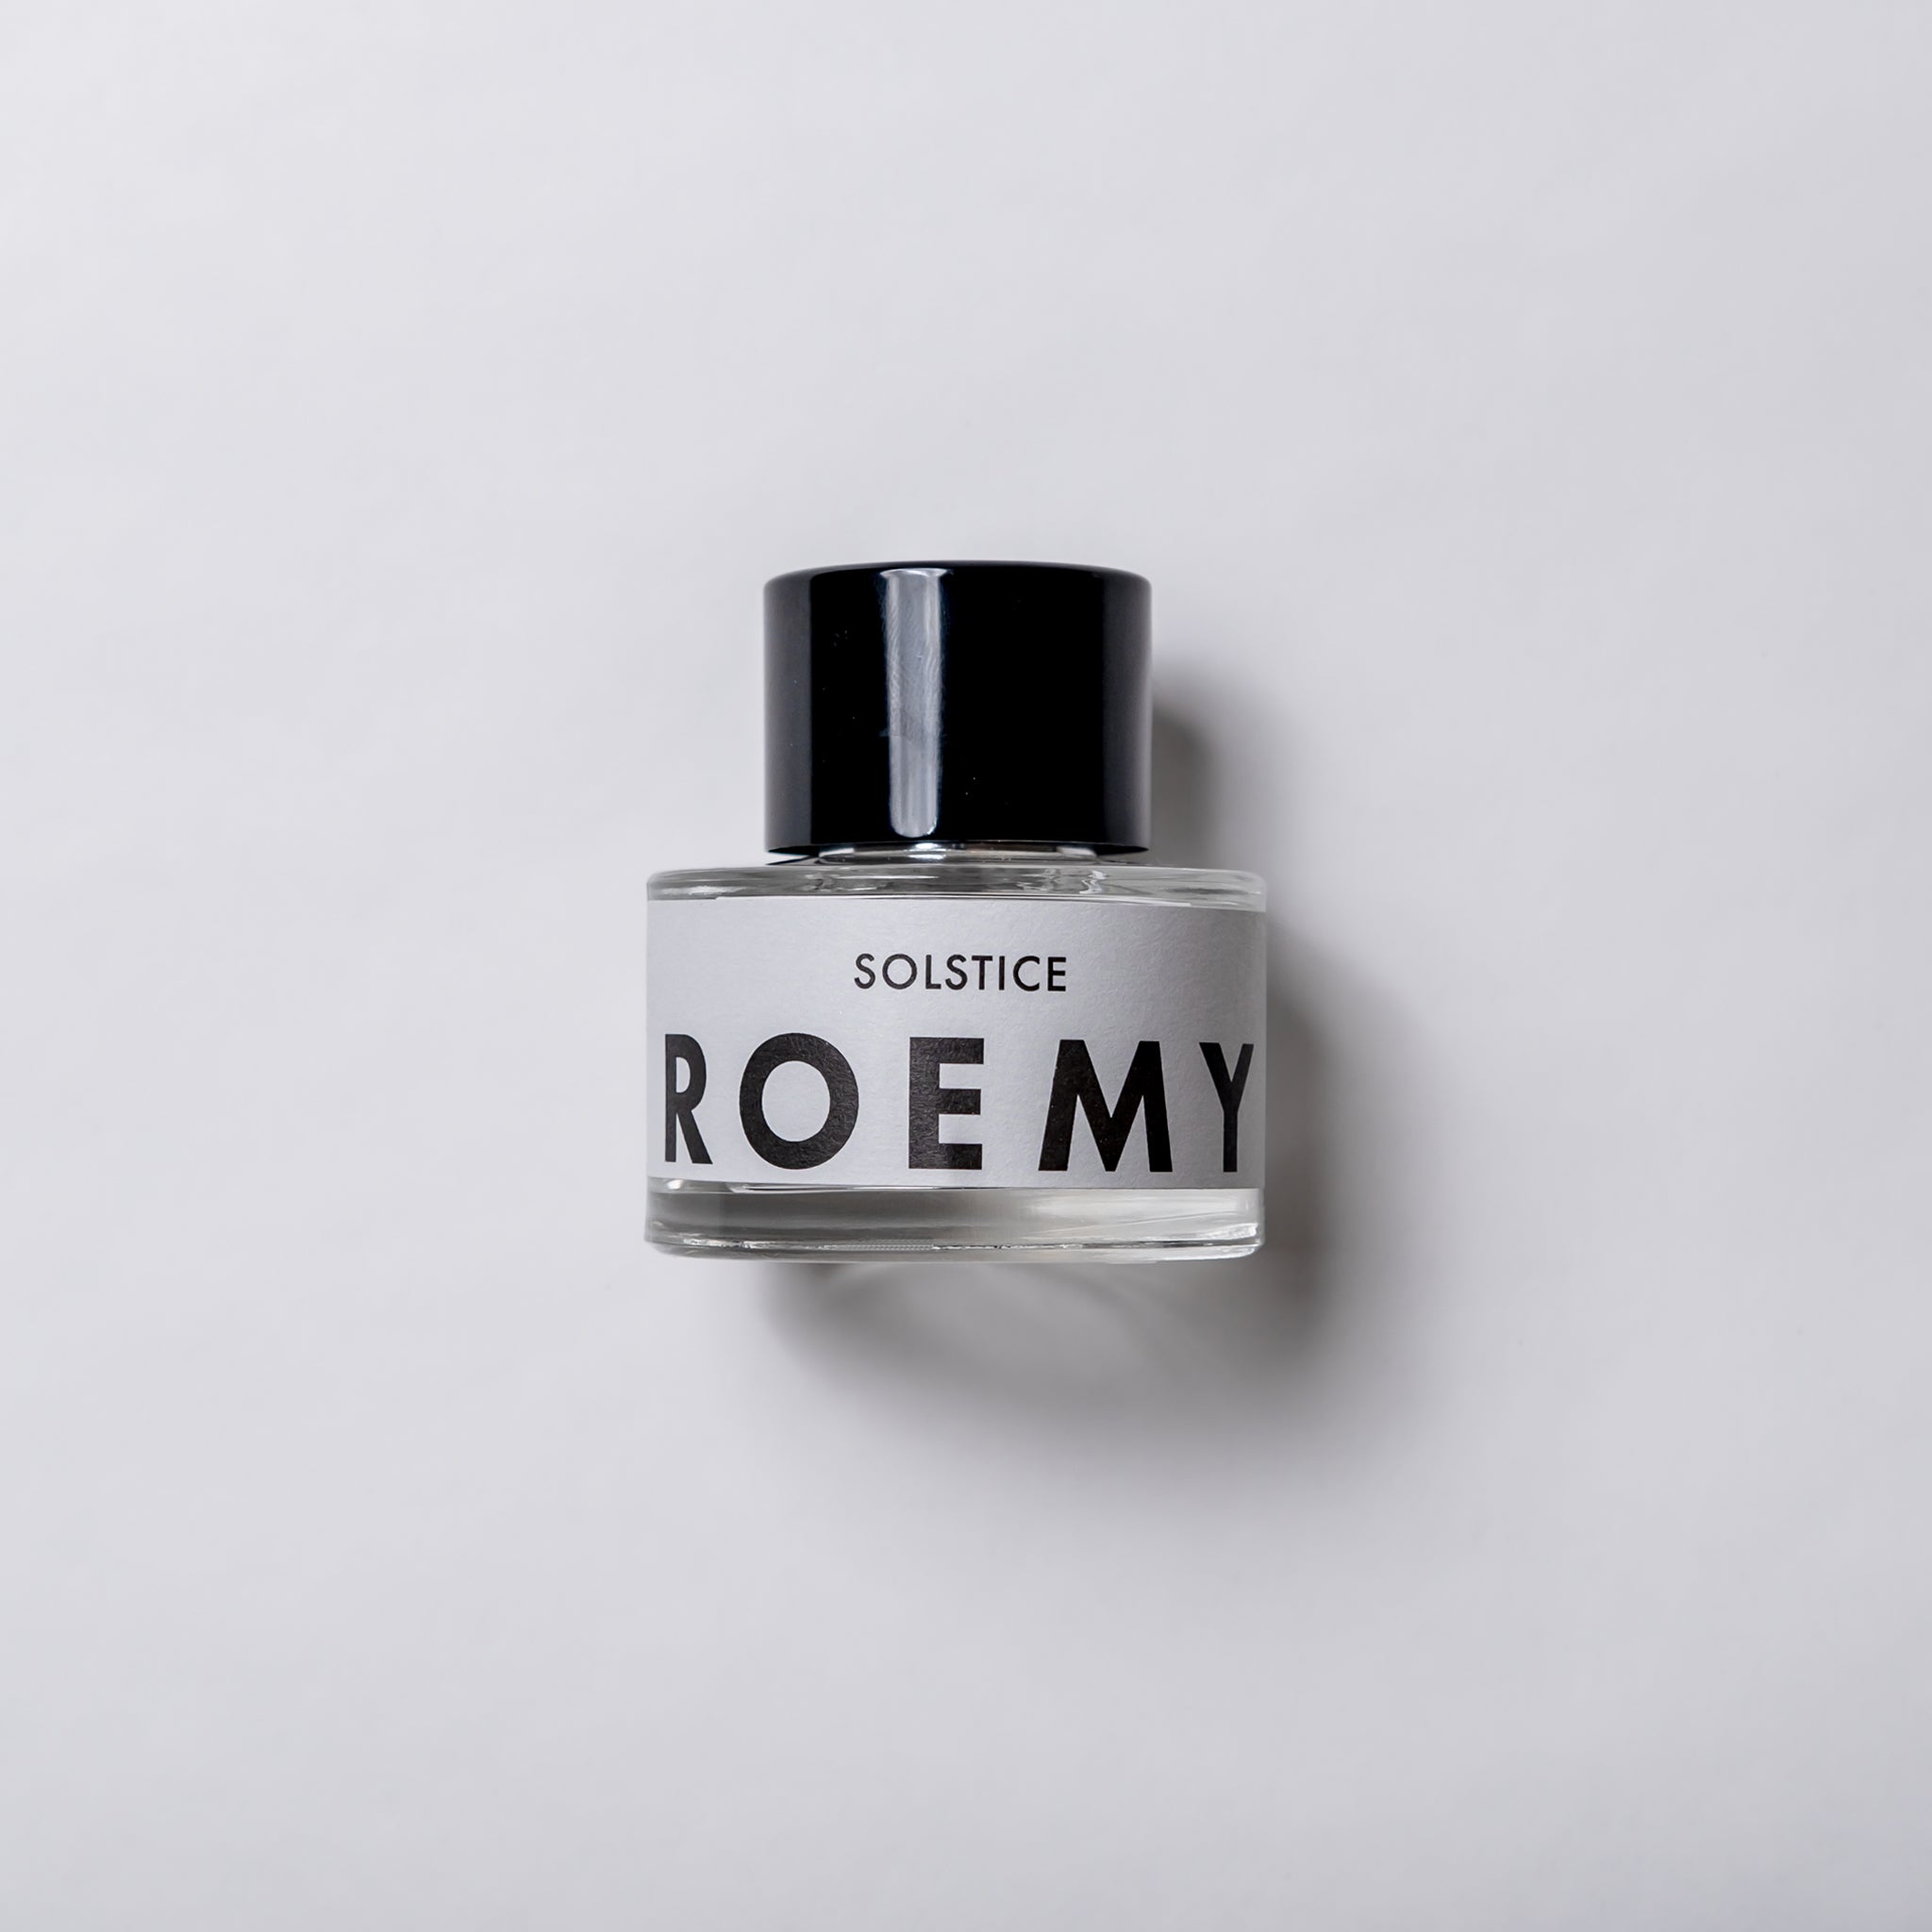 ROEMY Solstice 55mL Parfum - top down